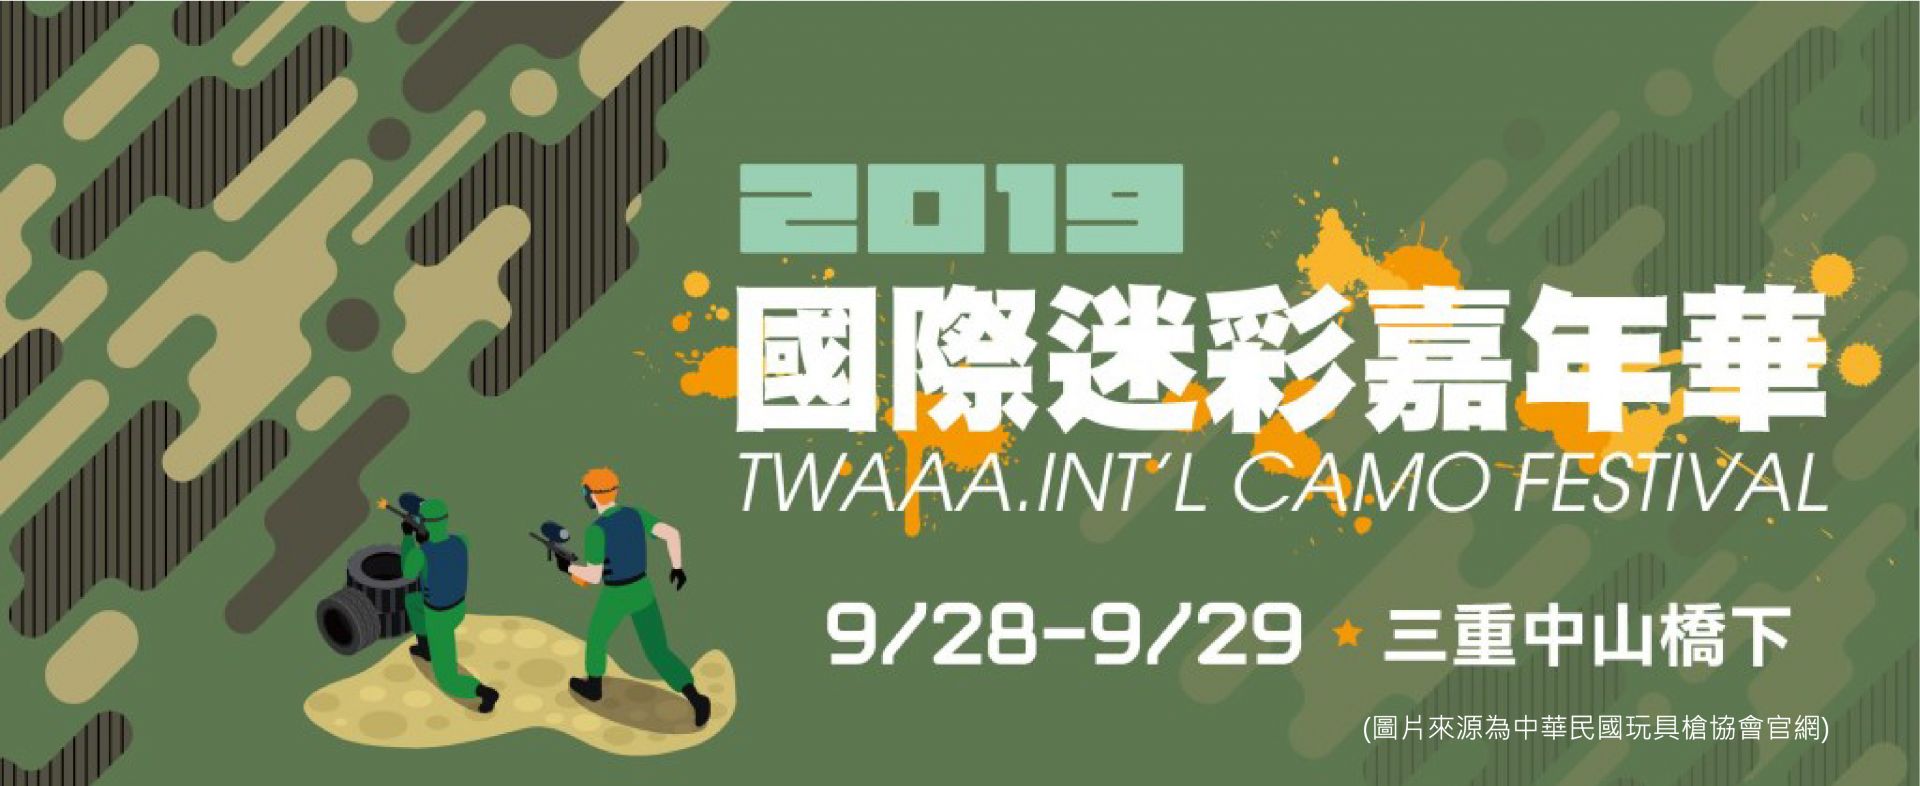 2019  TWAAA. International Camo Festival - PUFF DINO In 2019 TWAAA. International Camo Festival @Taipei